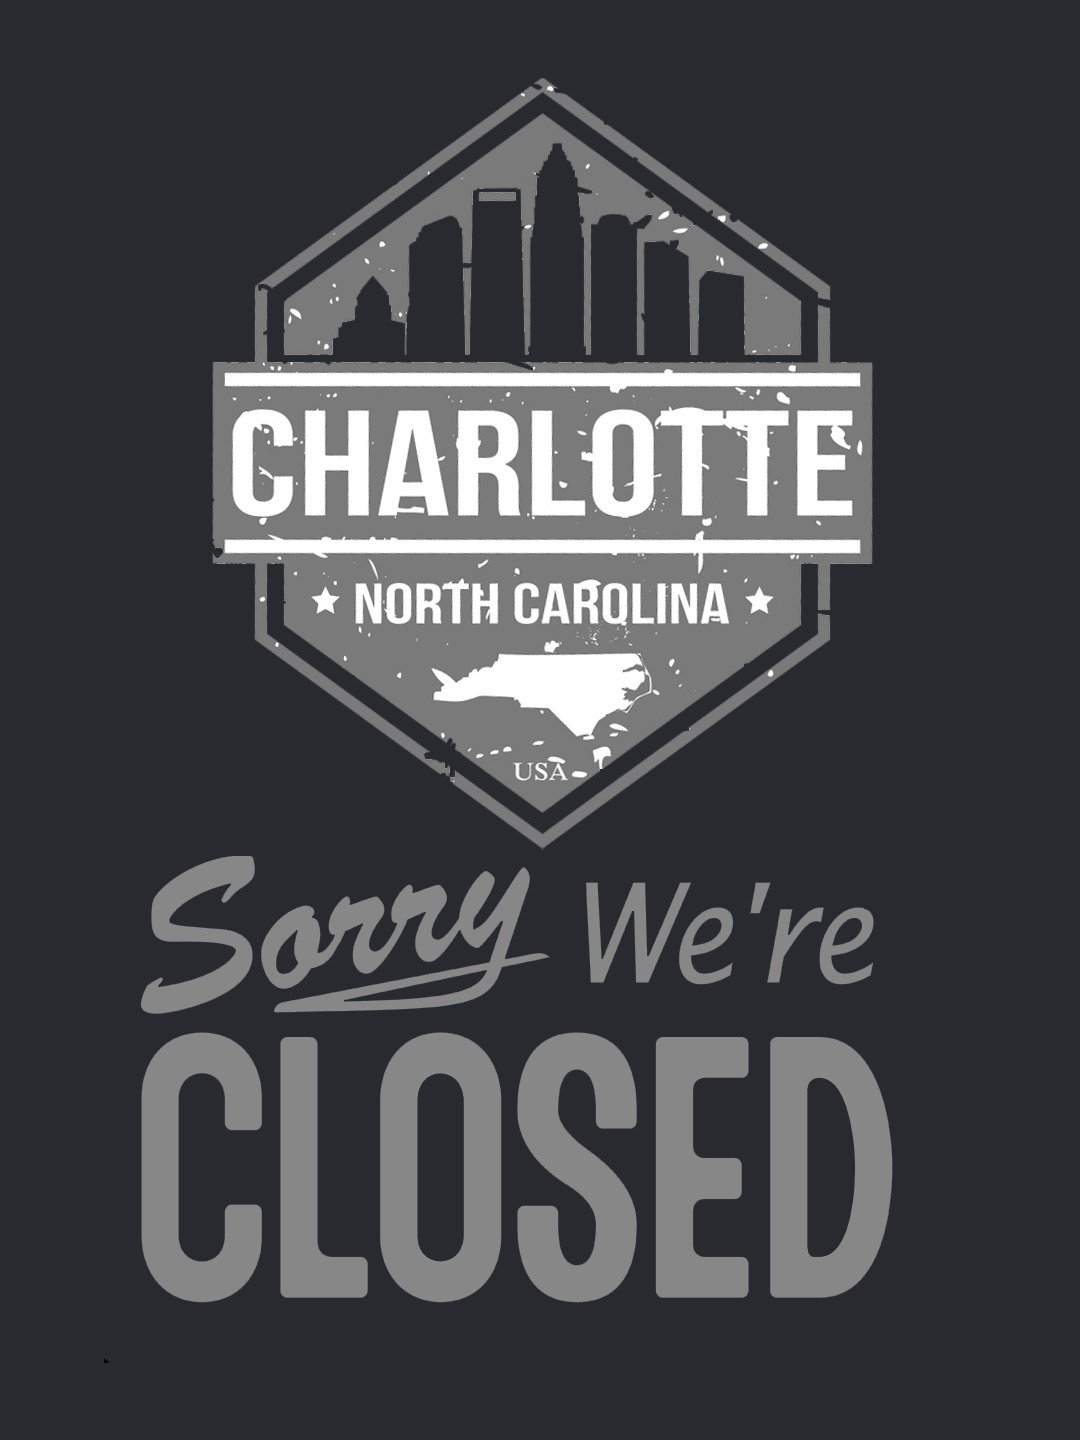 Store closureCharlotte, North Carolina